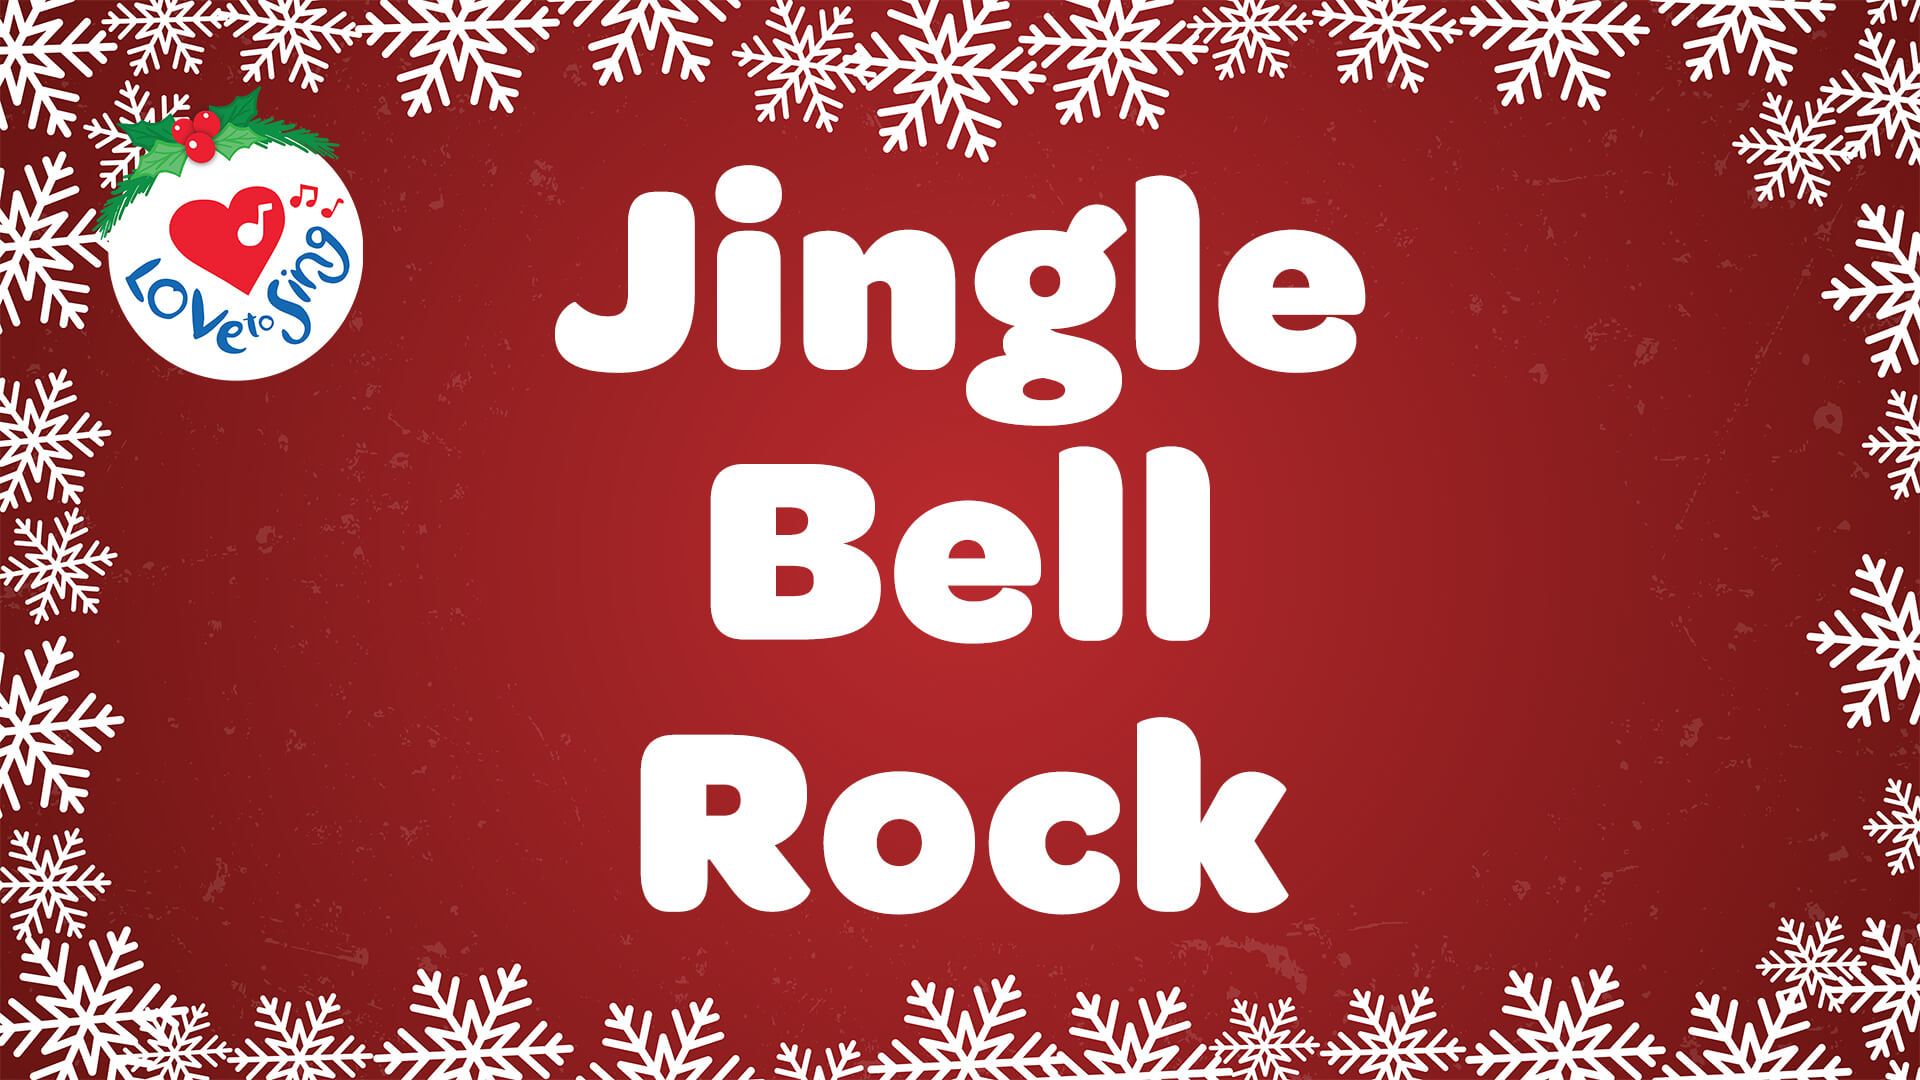 Jingle Bells Original Lyrics